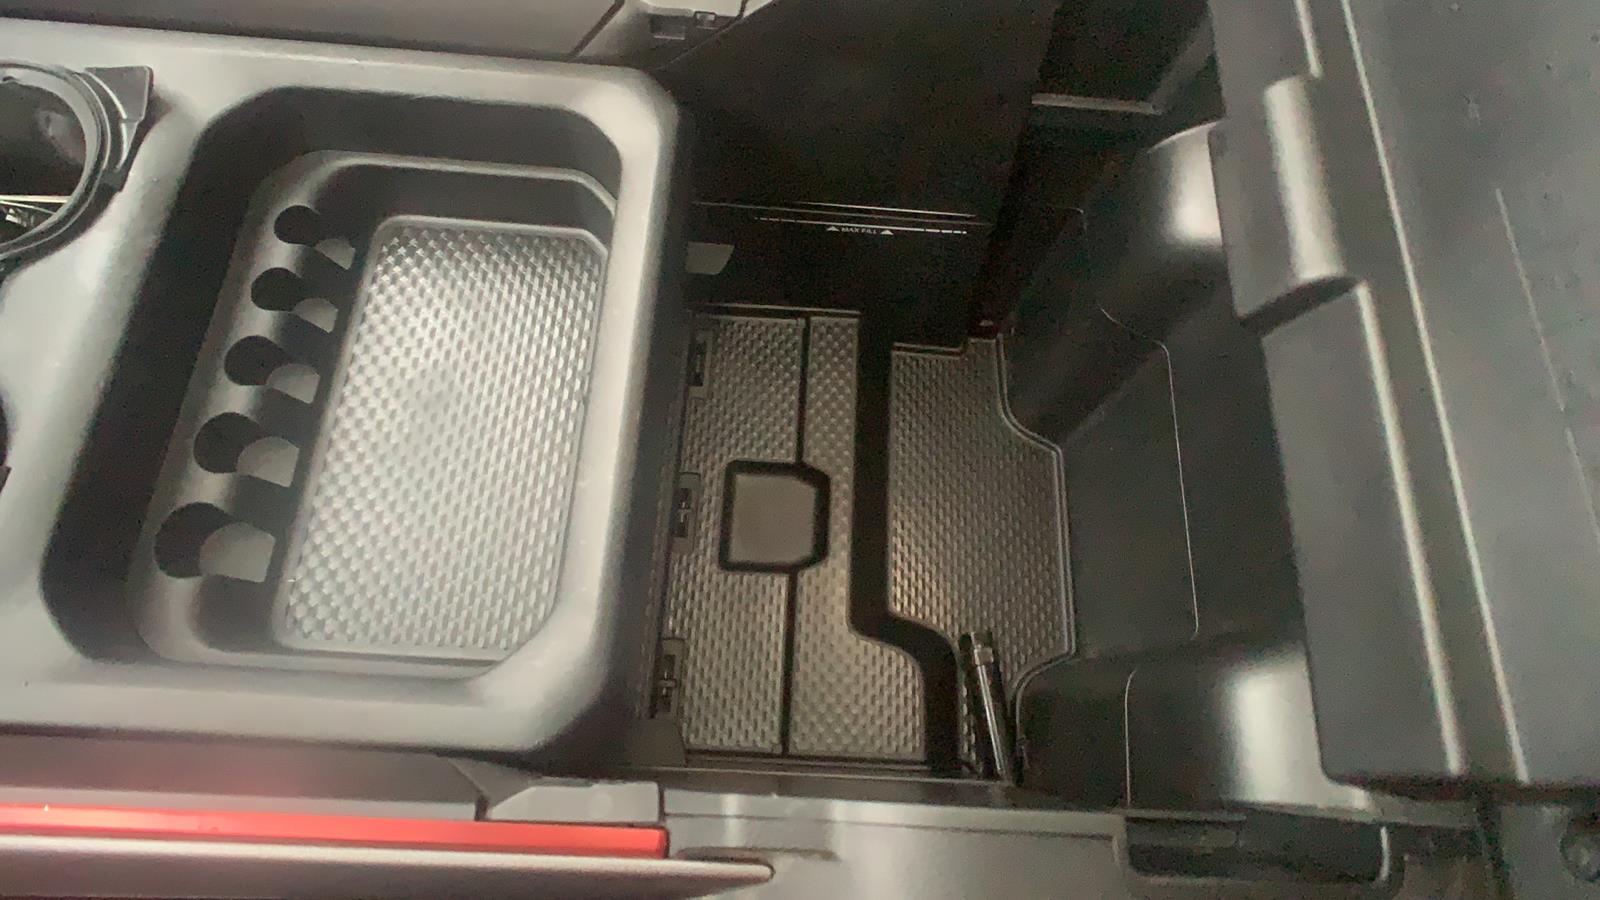 2019 Ram 1500 Standard Bed,Crew Cab Pickup